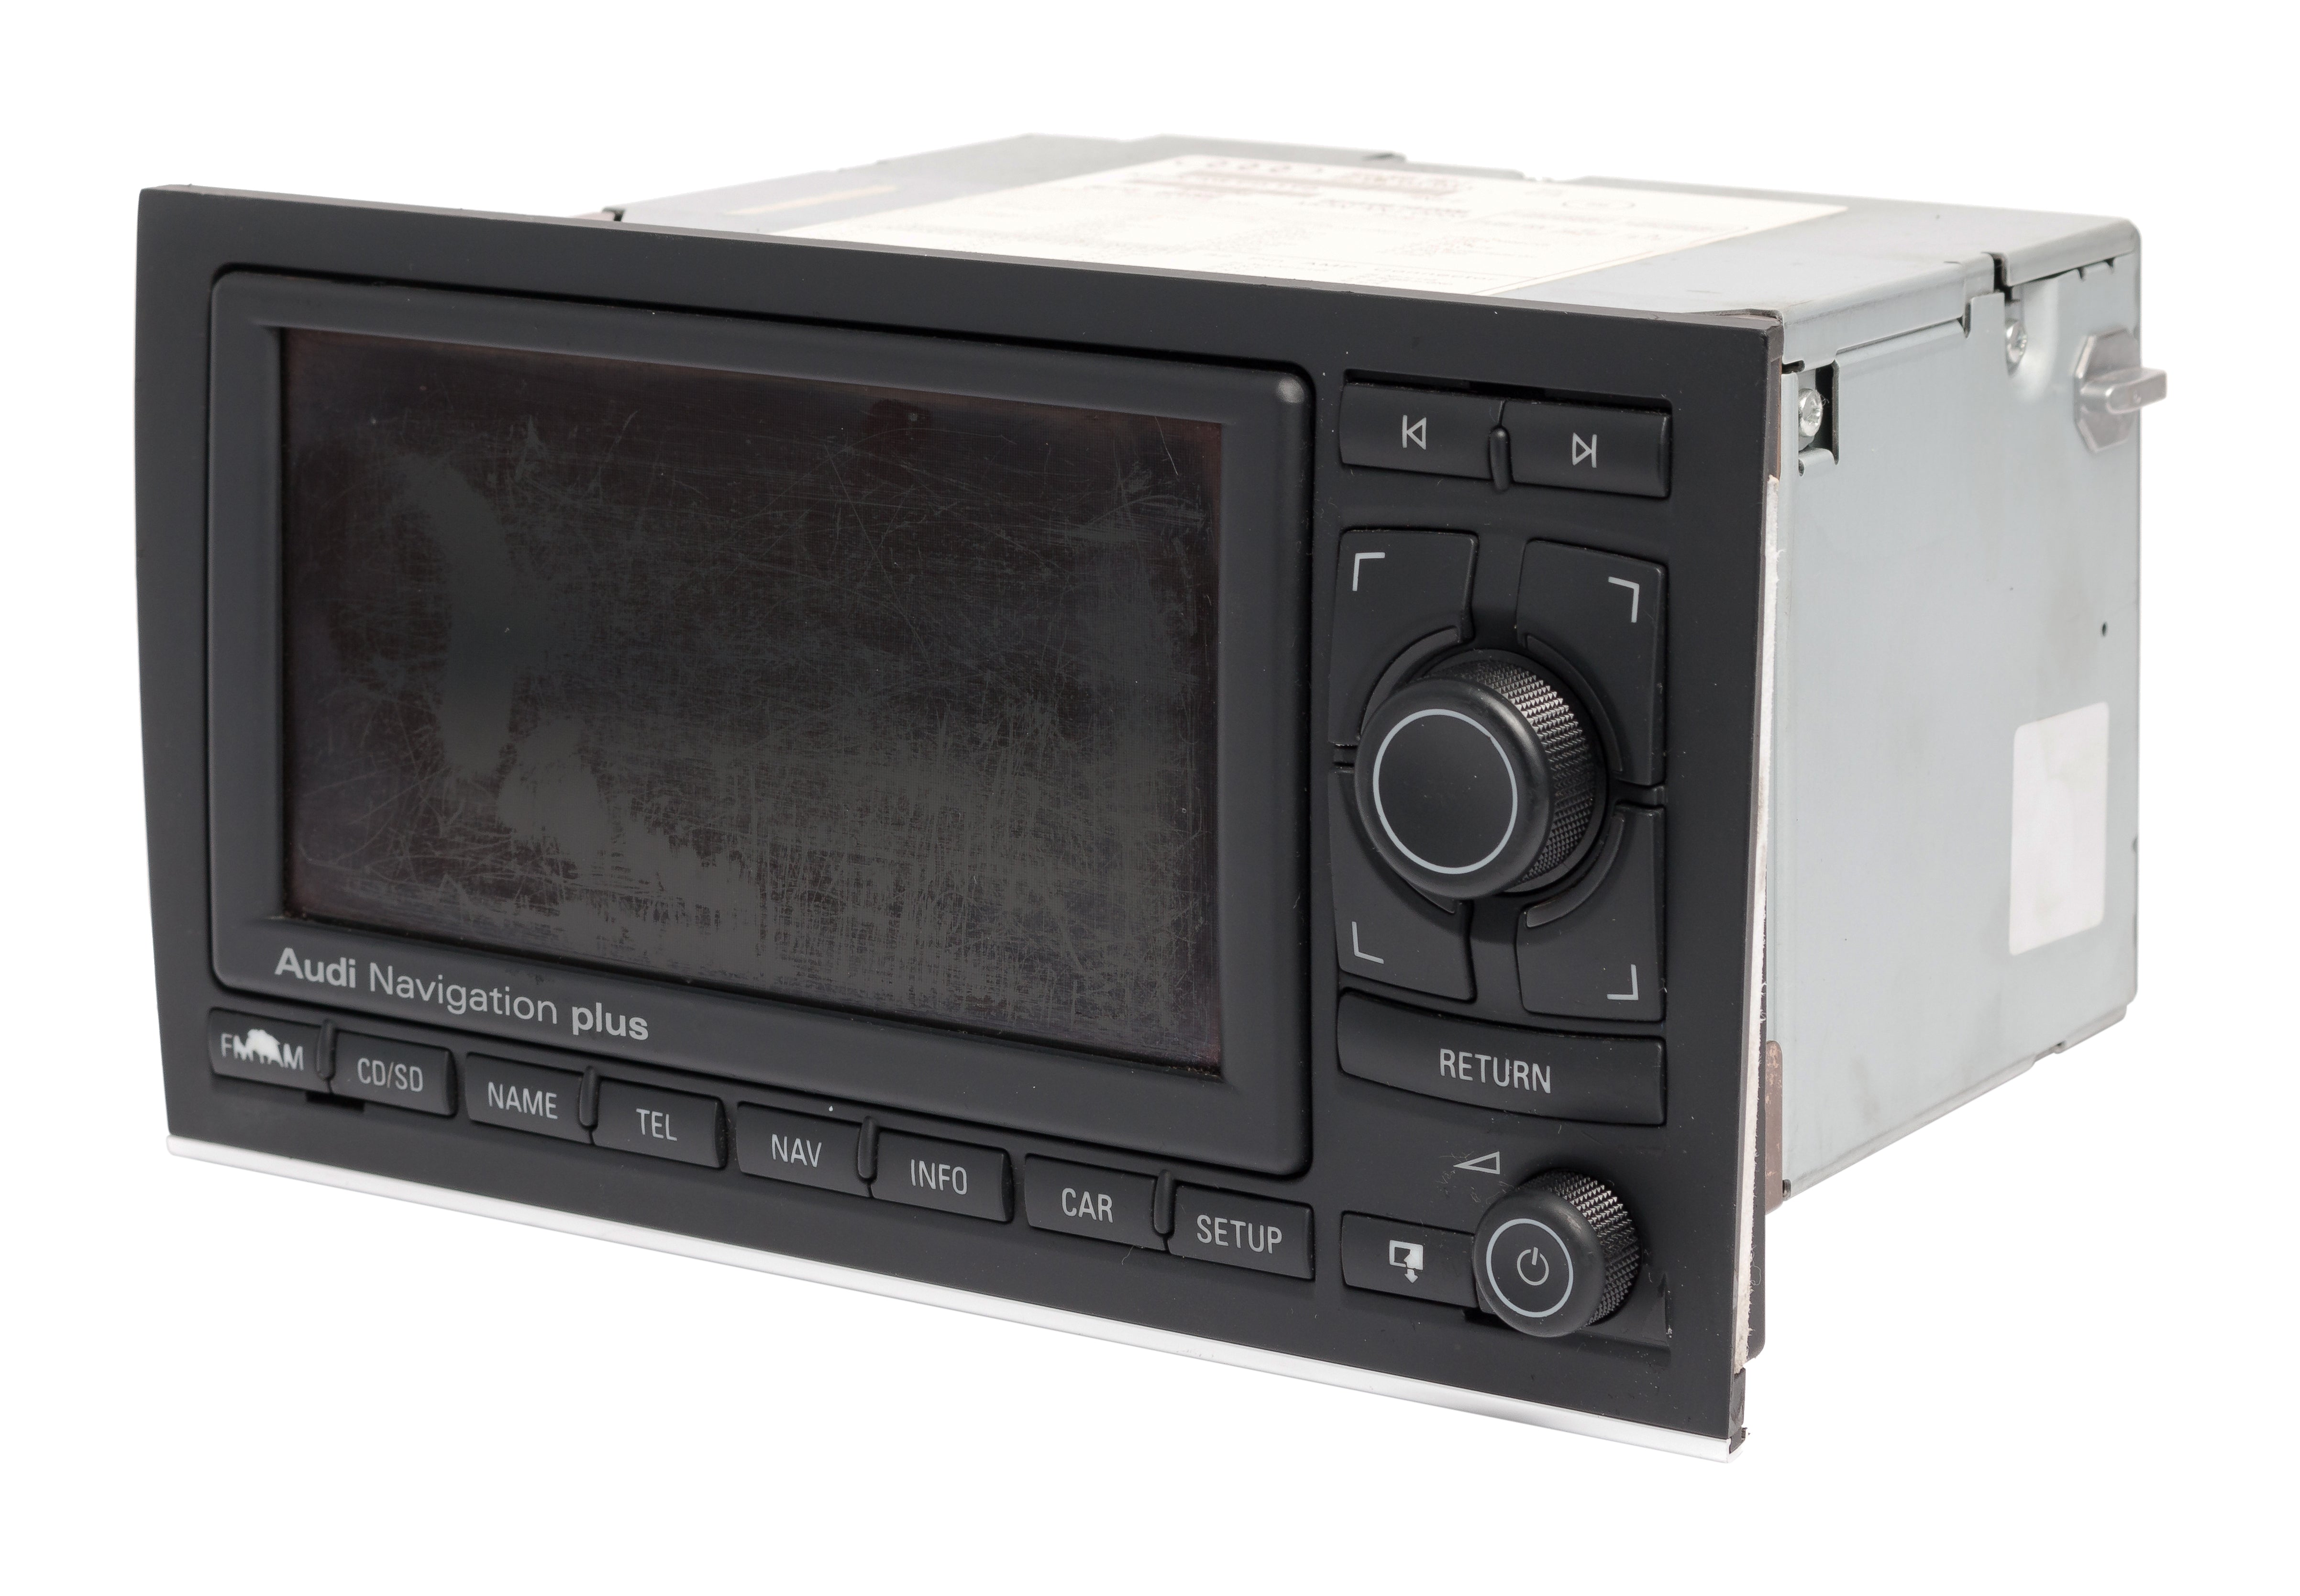 1factoryradio CD AMFM Screen A4 Display – w Navigation Player Radio Audi S4 2006-2009